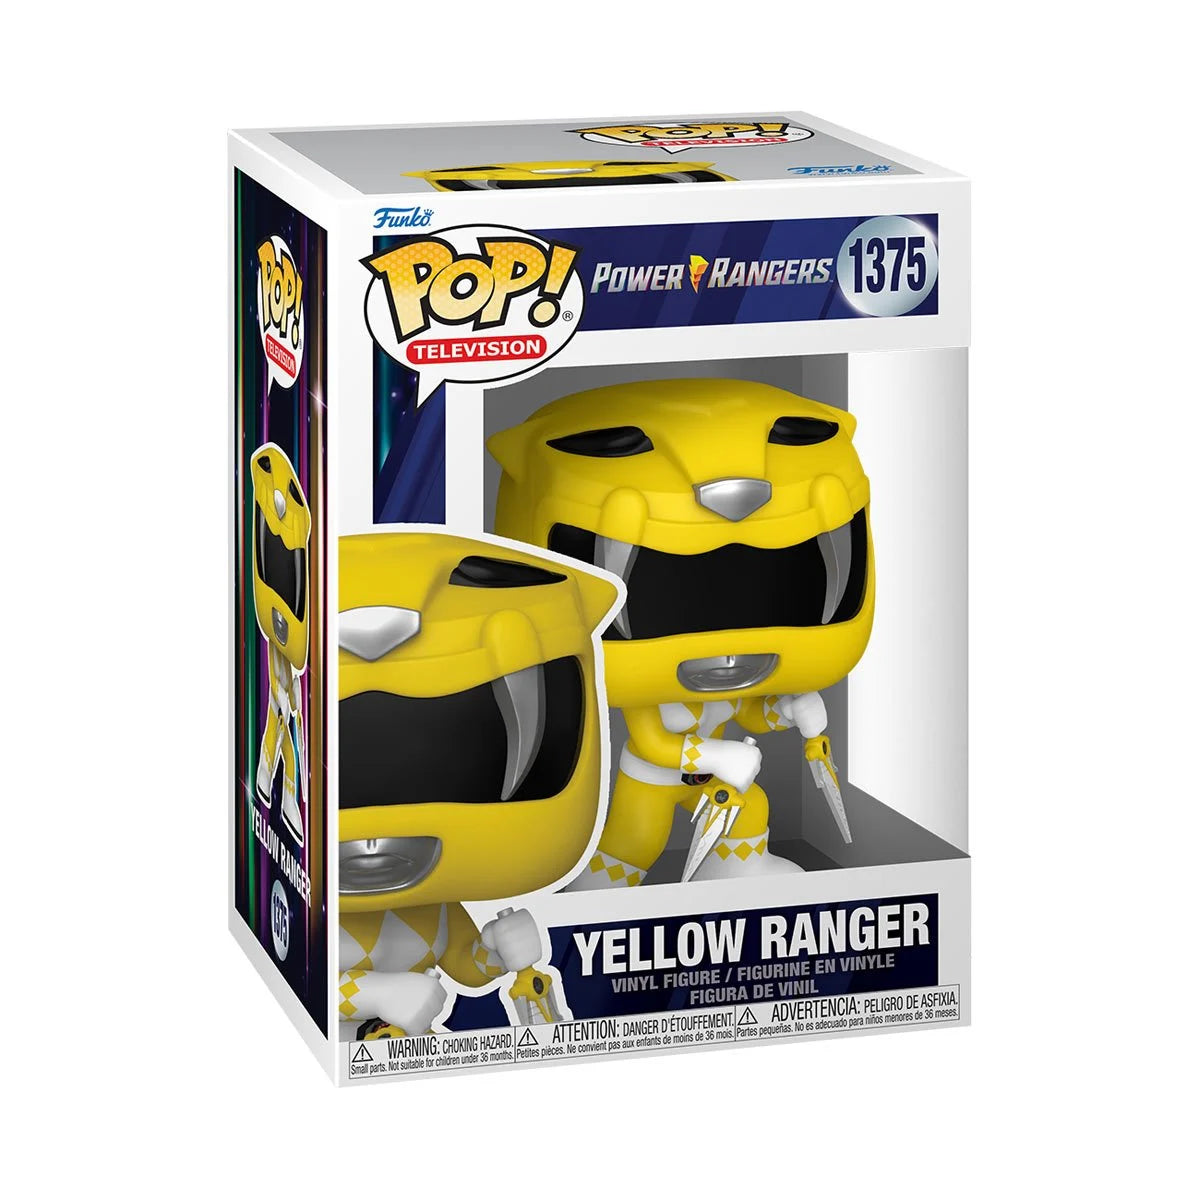 Mighty Morphin Power Rangers 30th Anniversary Yellow Ranger Funko Pop! Vinyl Figure #1375